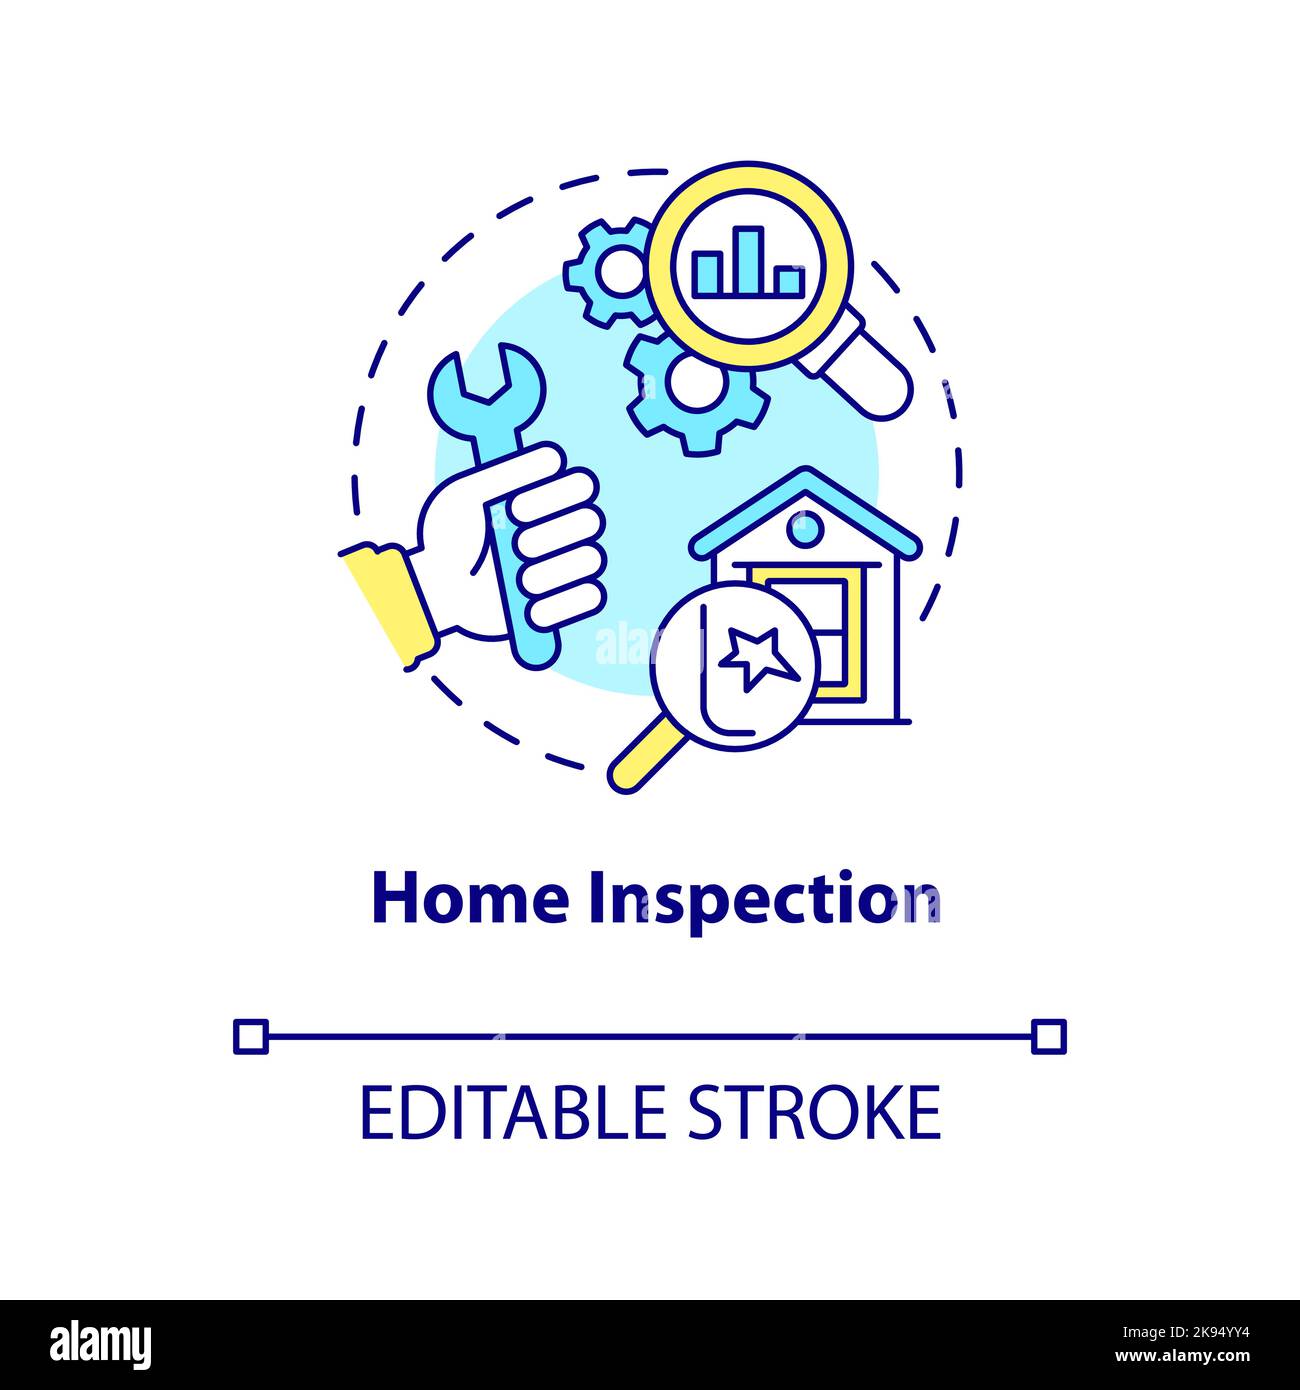 Home inspection concept icon Stock Vector